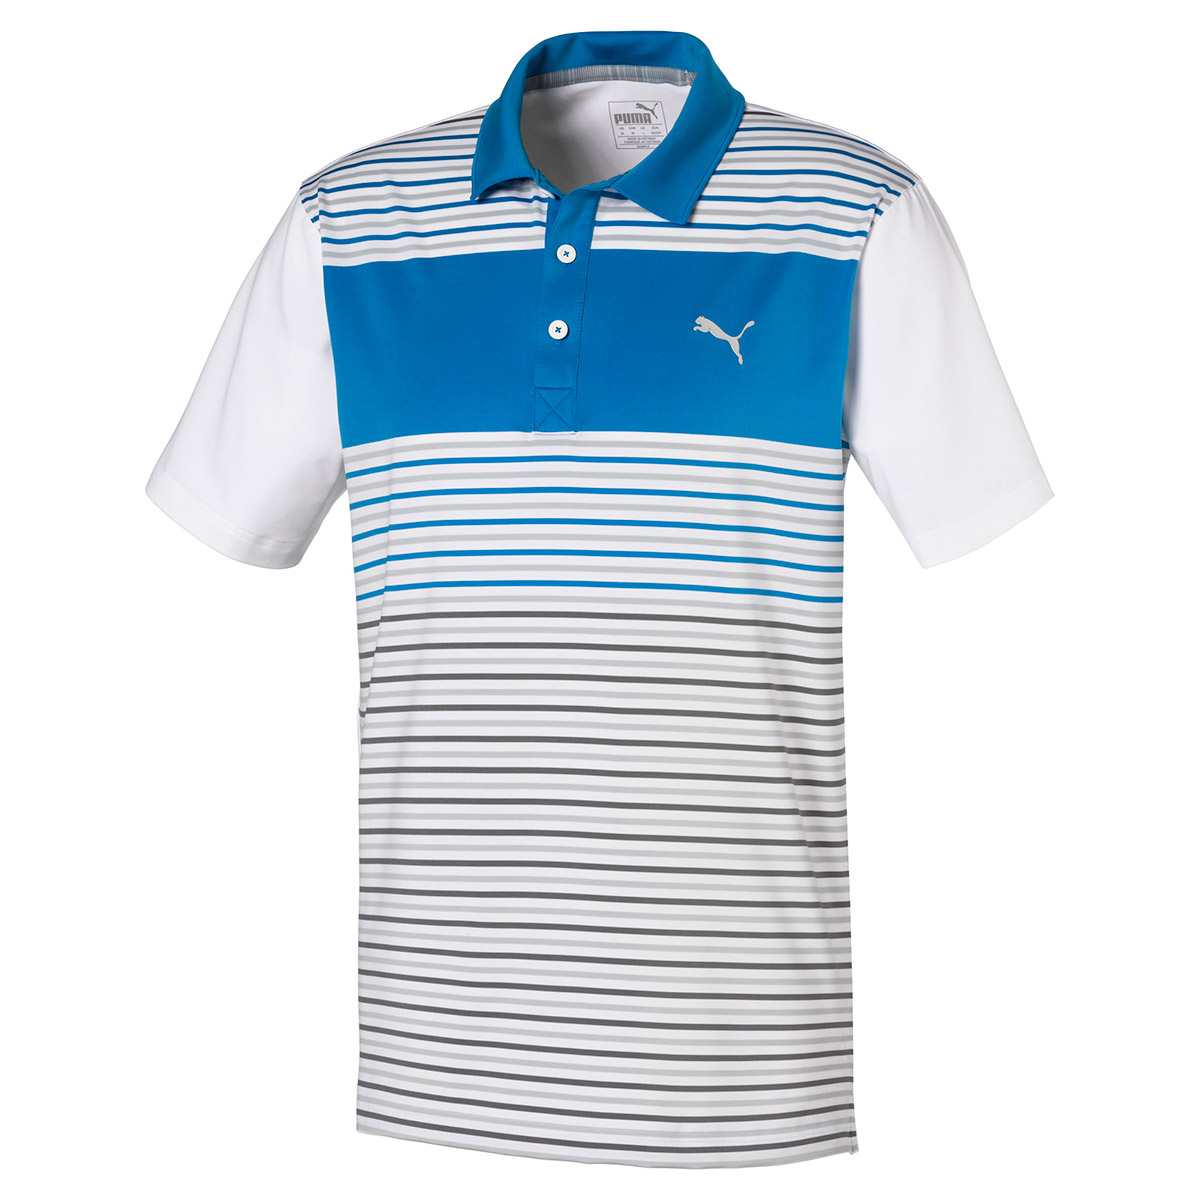 puma golf shirts 2019